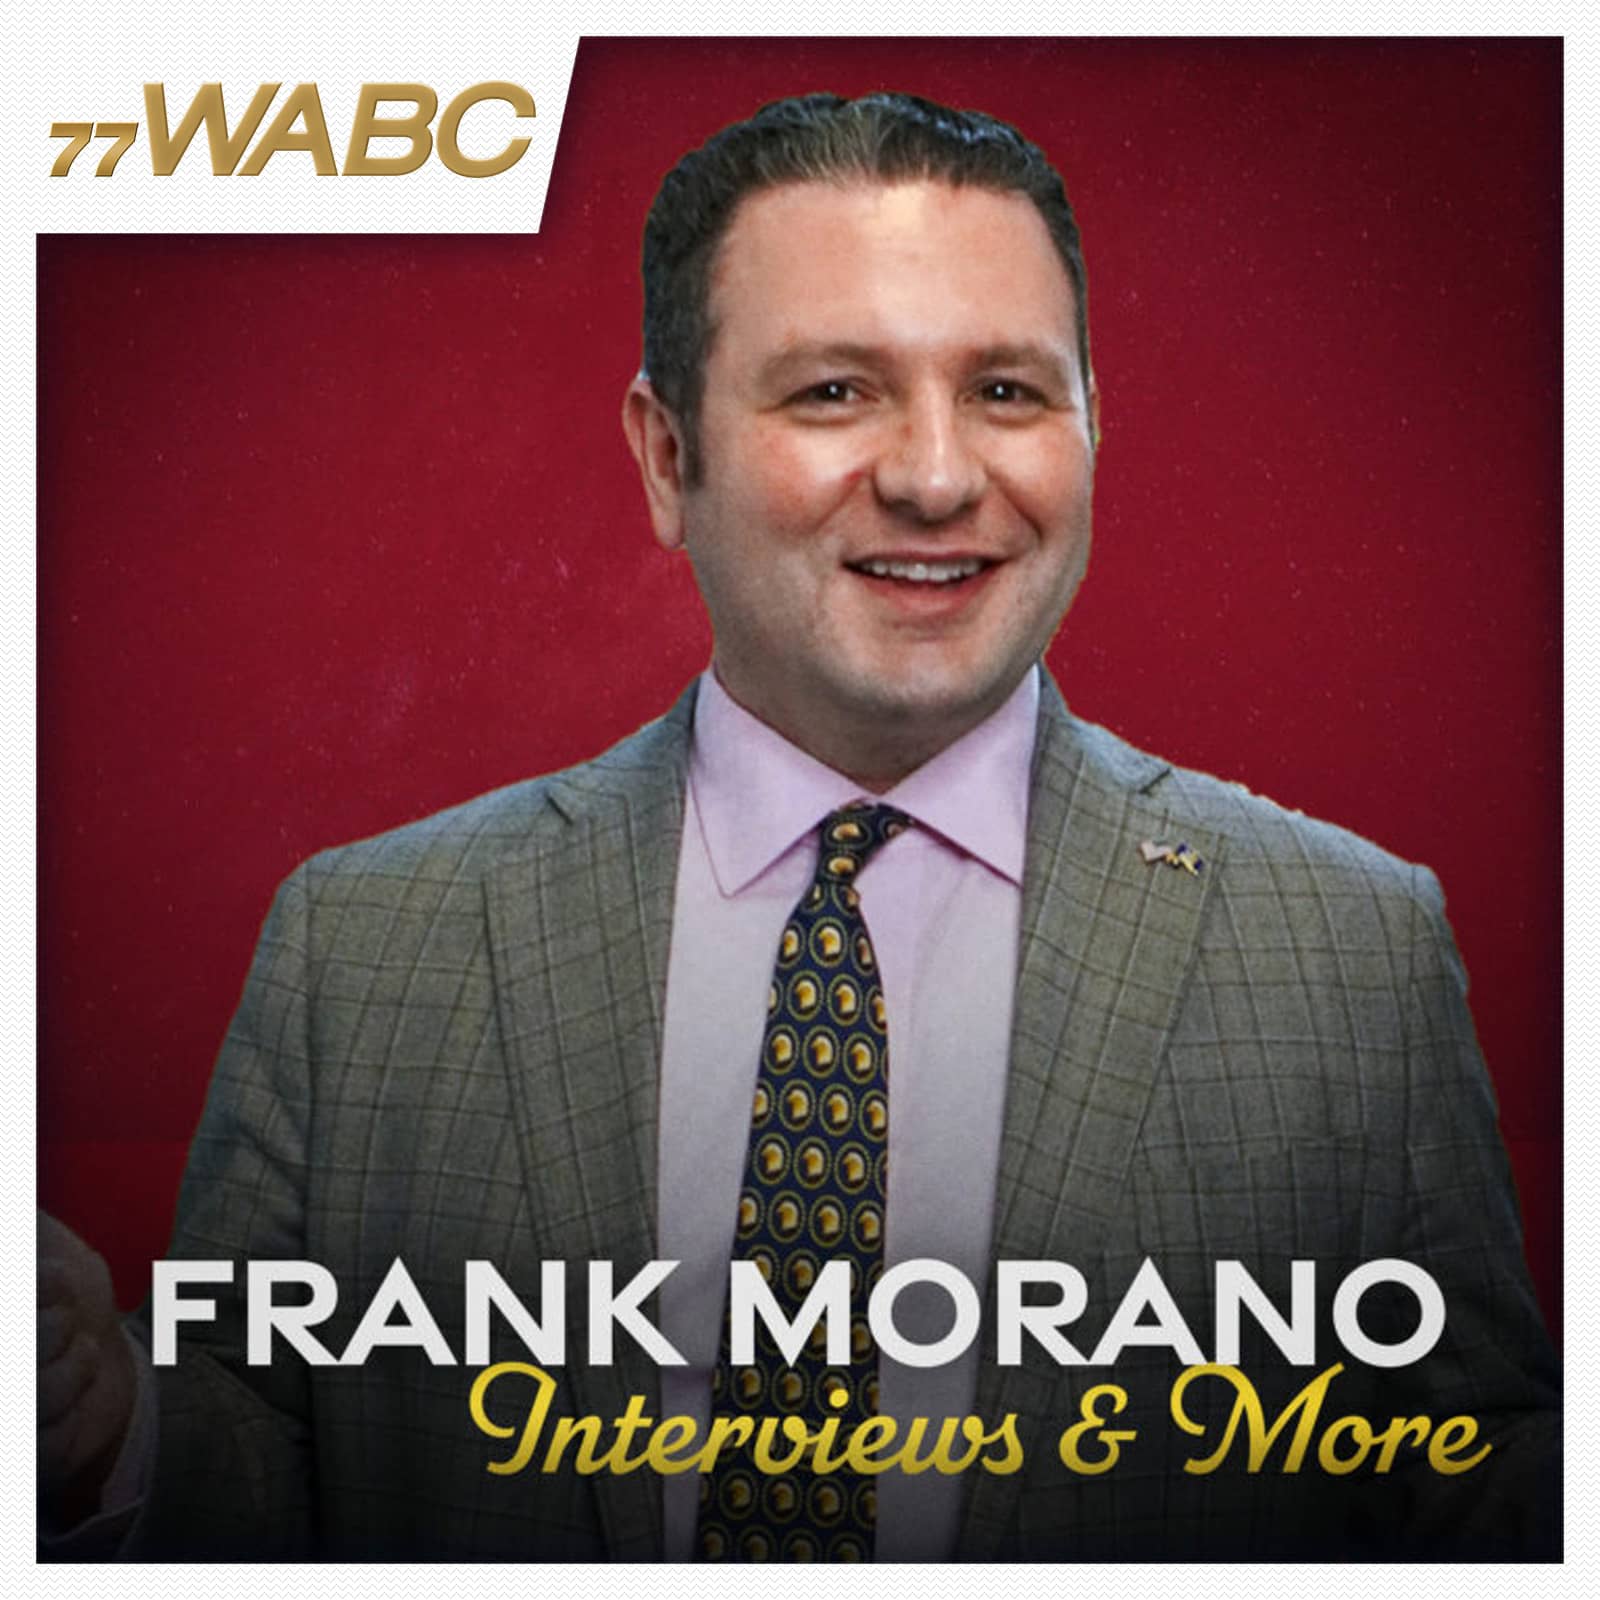 frank-morano-interviews-and-more-podcast-new-logo-331